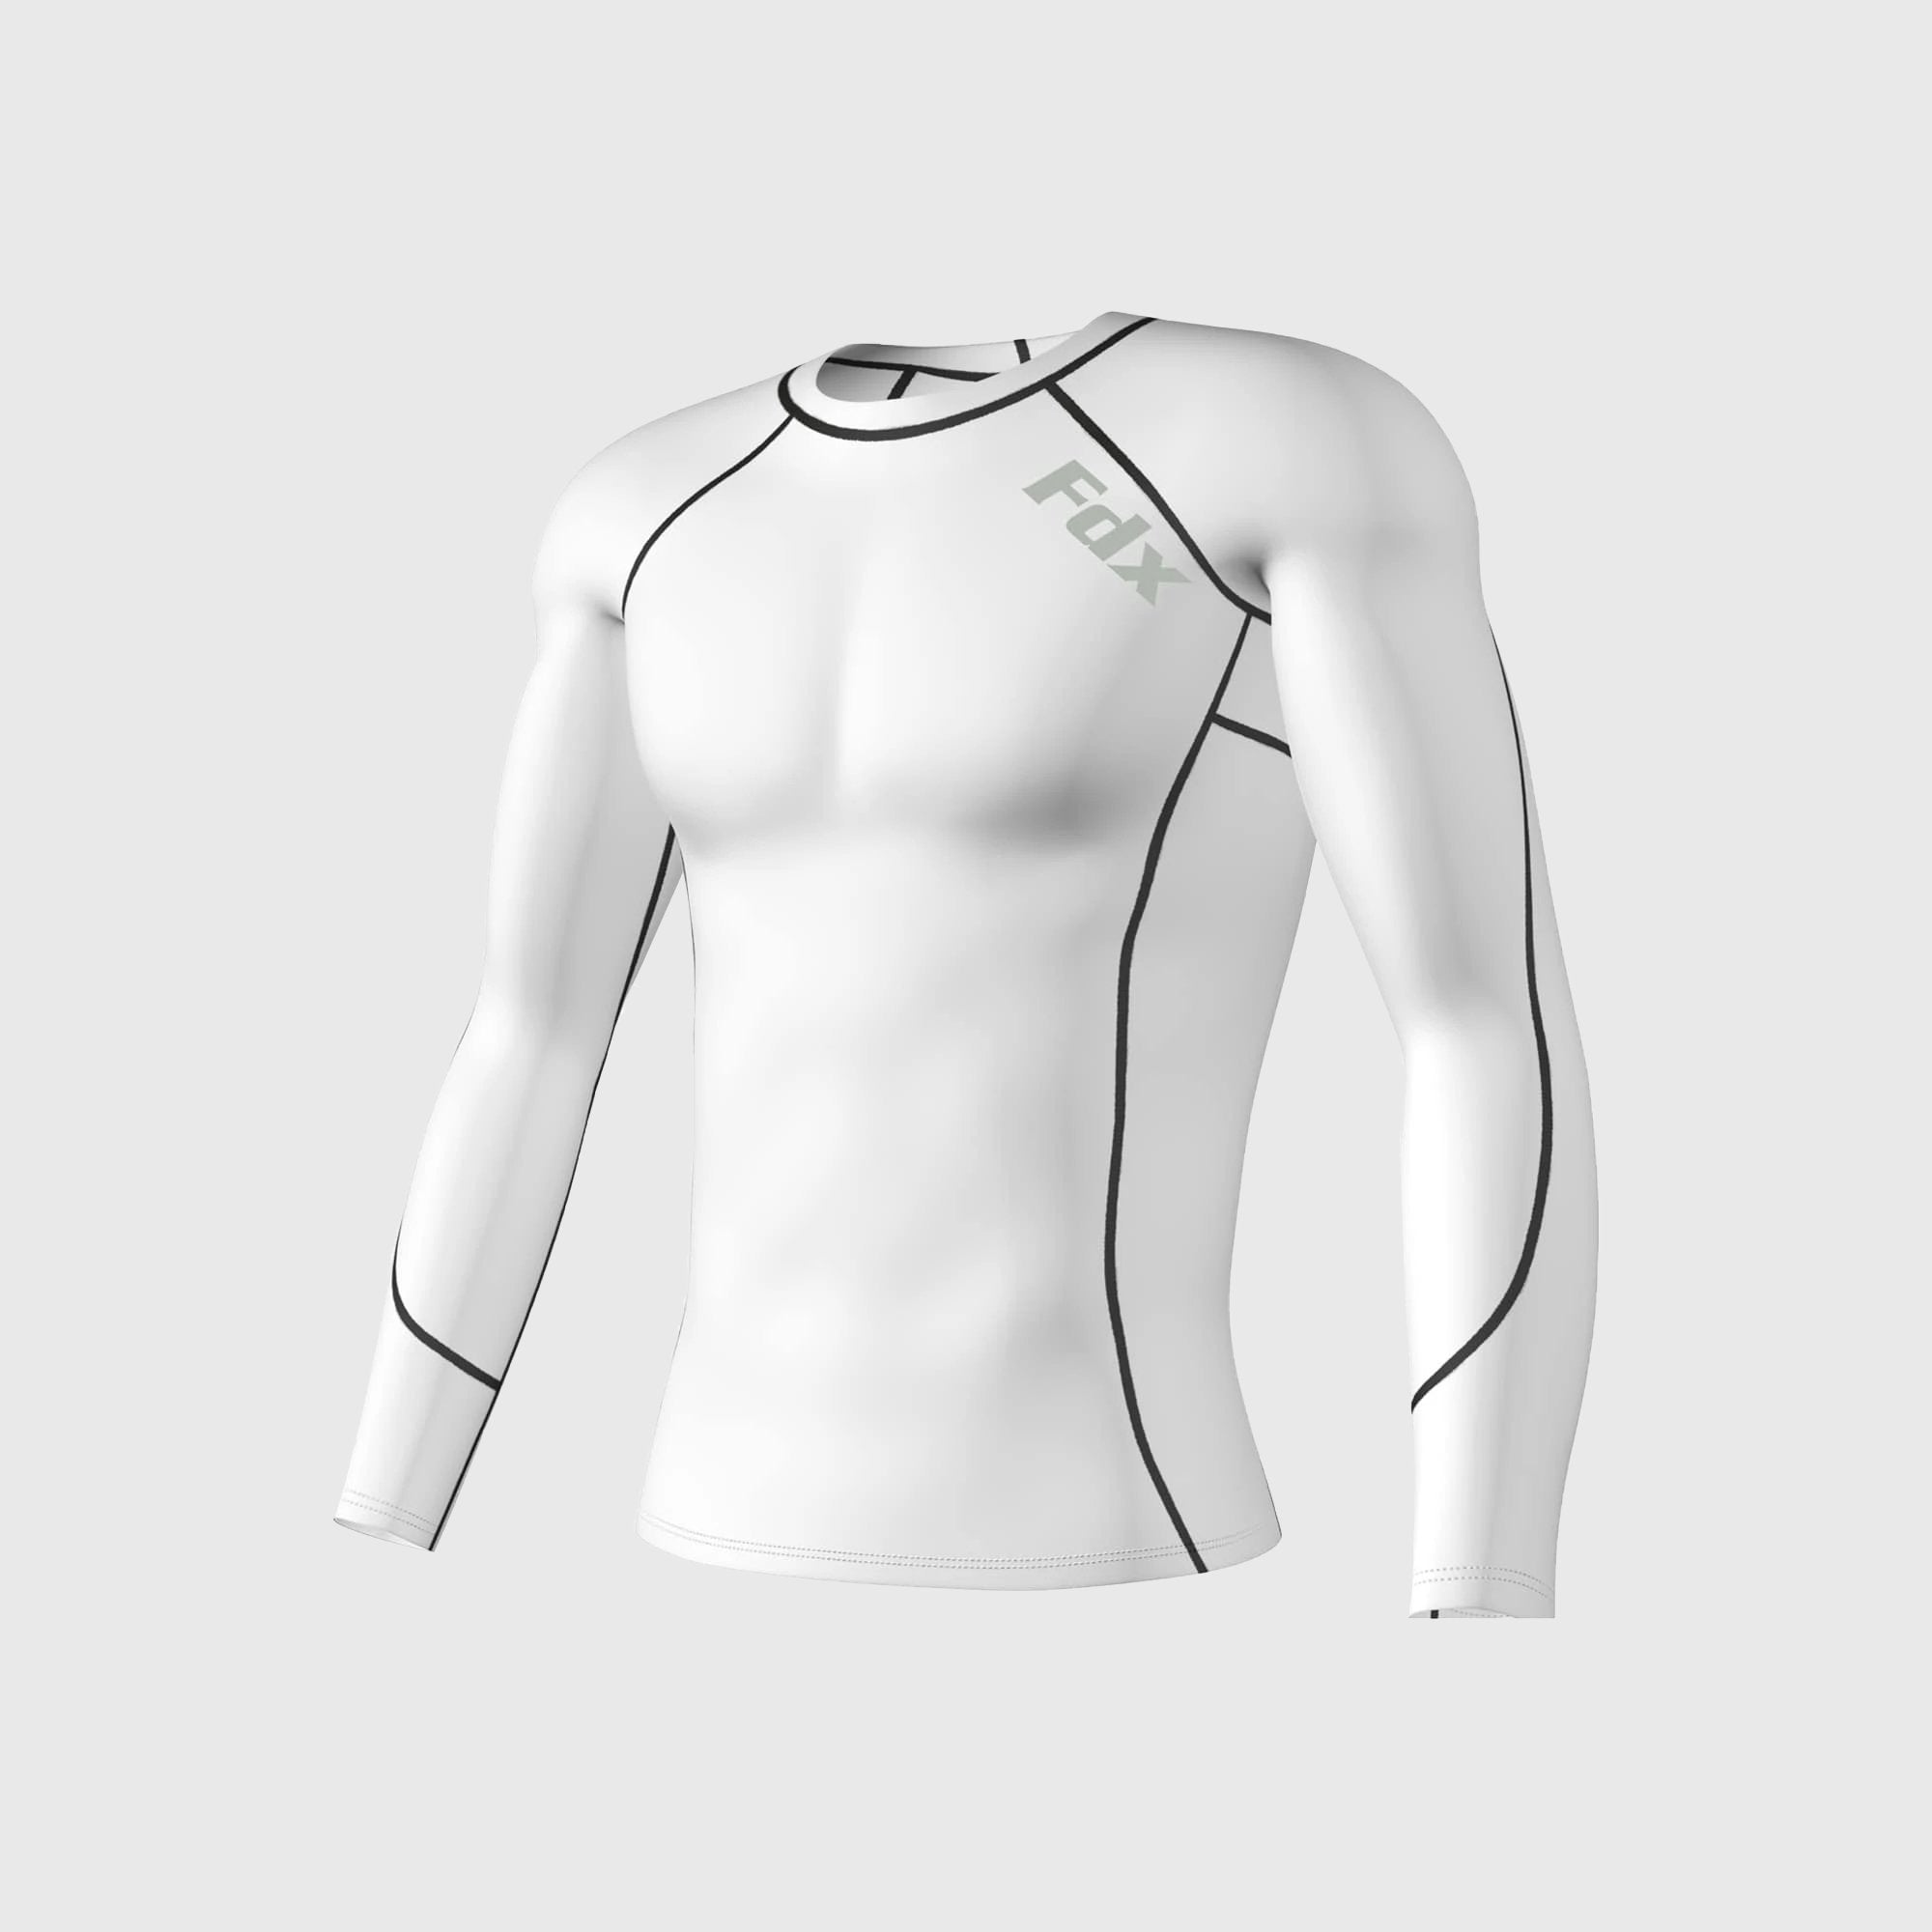 Fdx Cosmic Men's Long Sleeve Thermal Winter Gym Shirt White